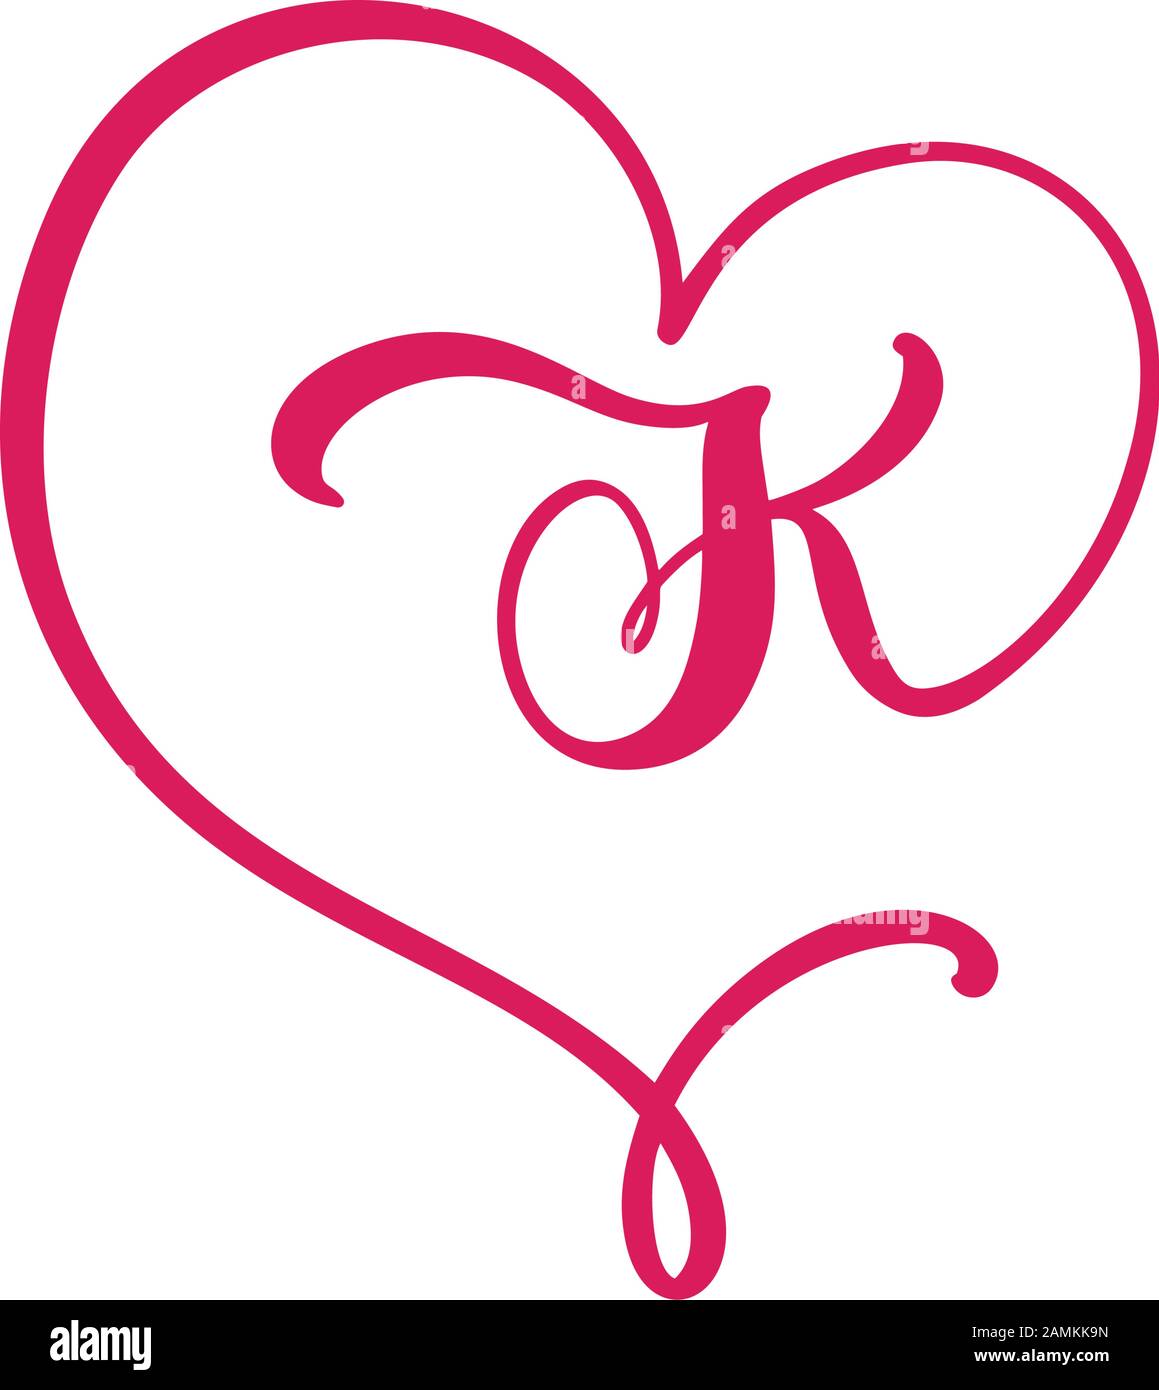 Vector Vintage floral monogram letter K. Calligraphy element logo Valentine flourish frame. Hand drawn heart sign for page decoration and design Stock Vector